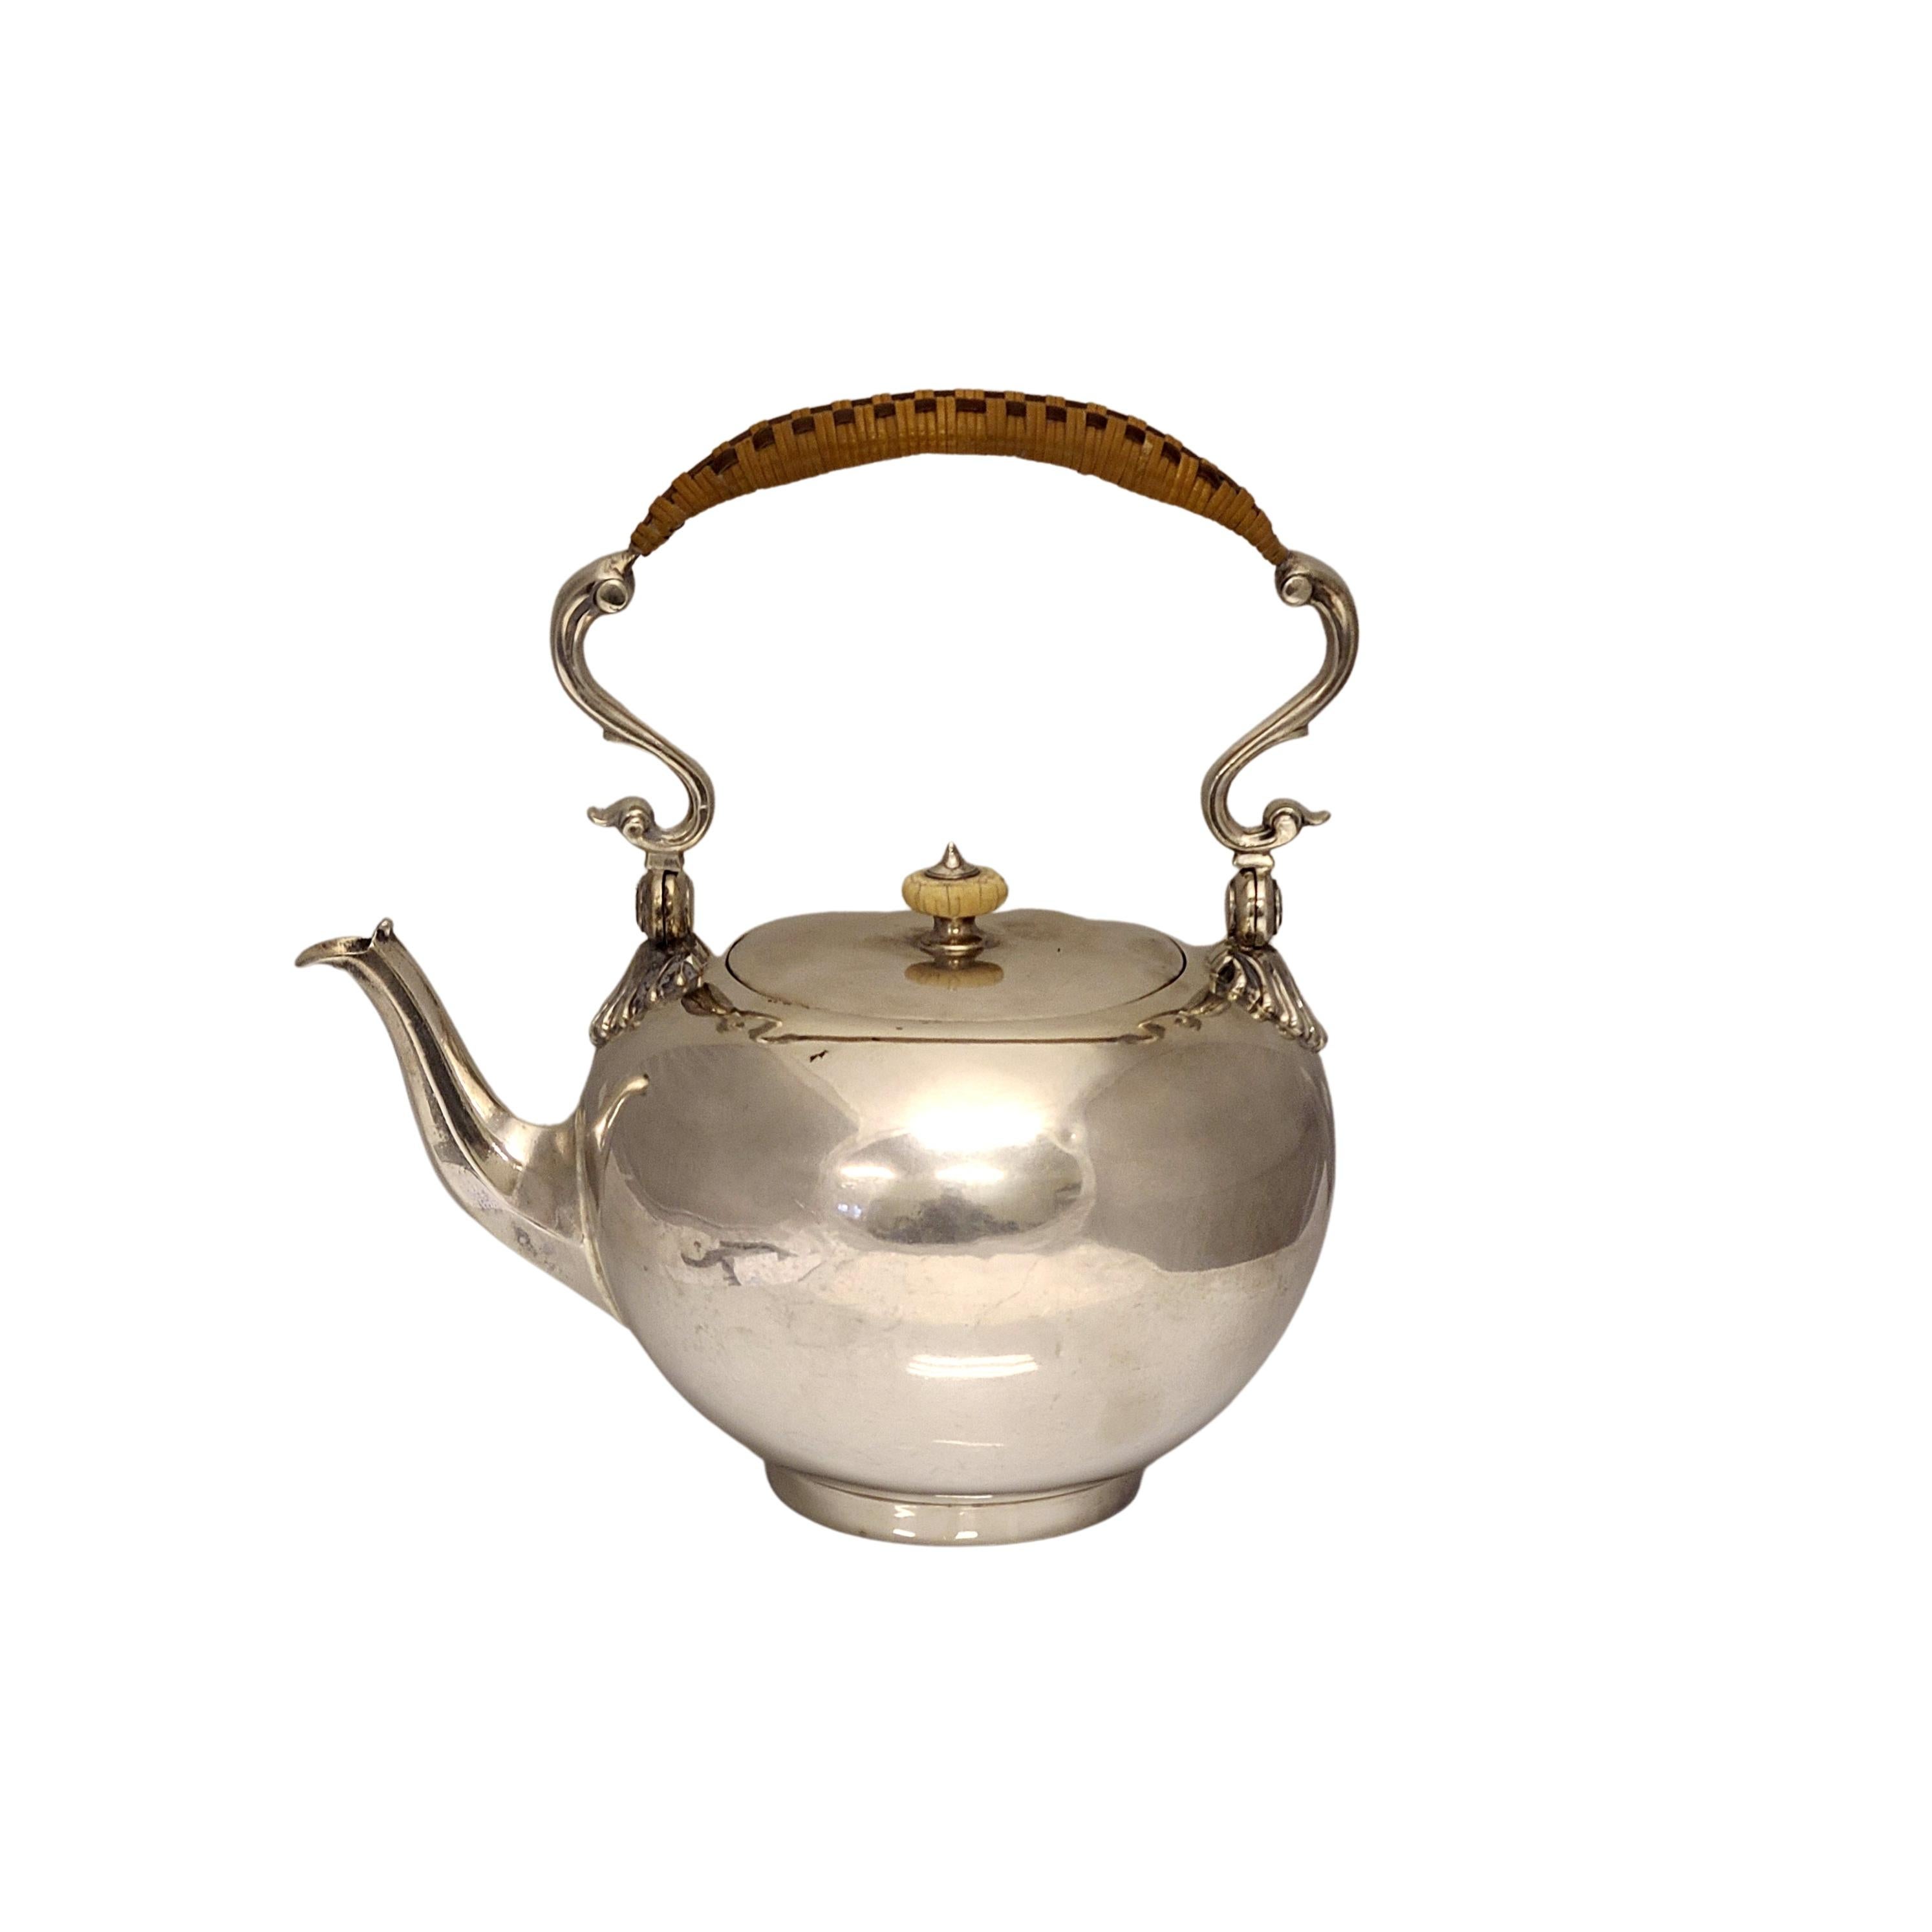 wm rogers 800 silver teapot value